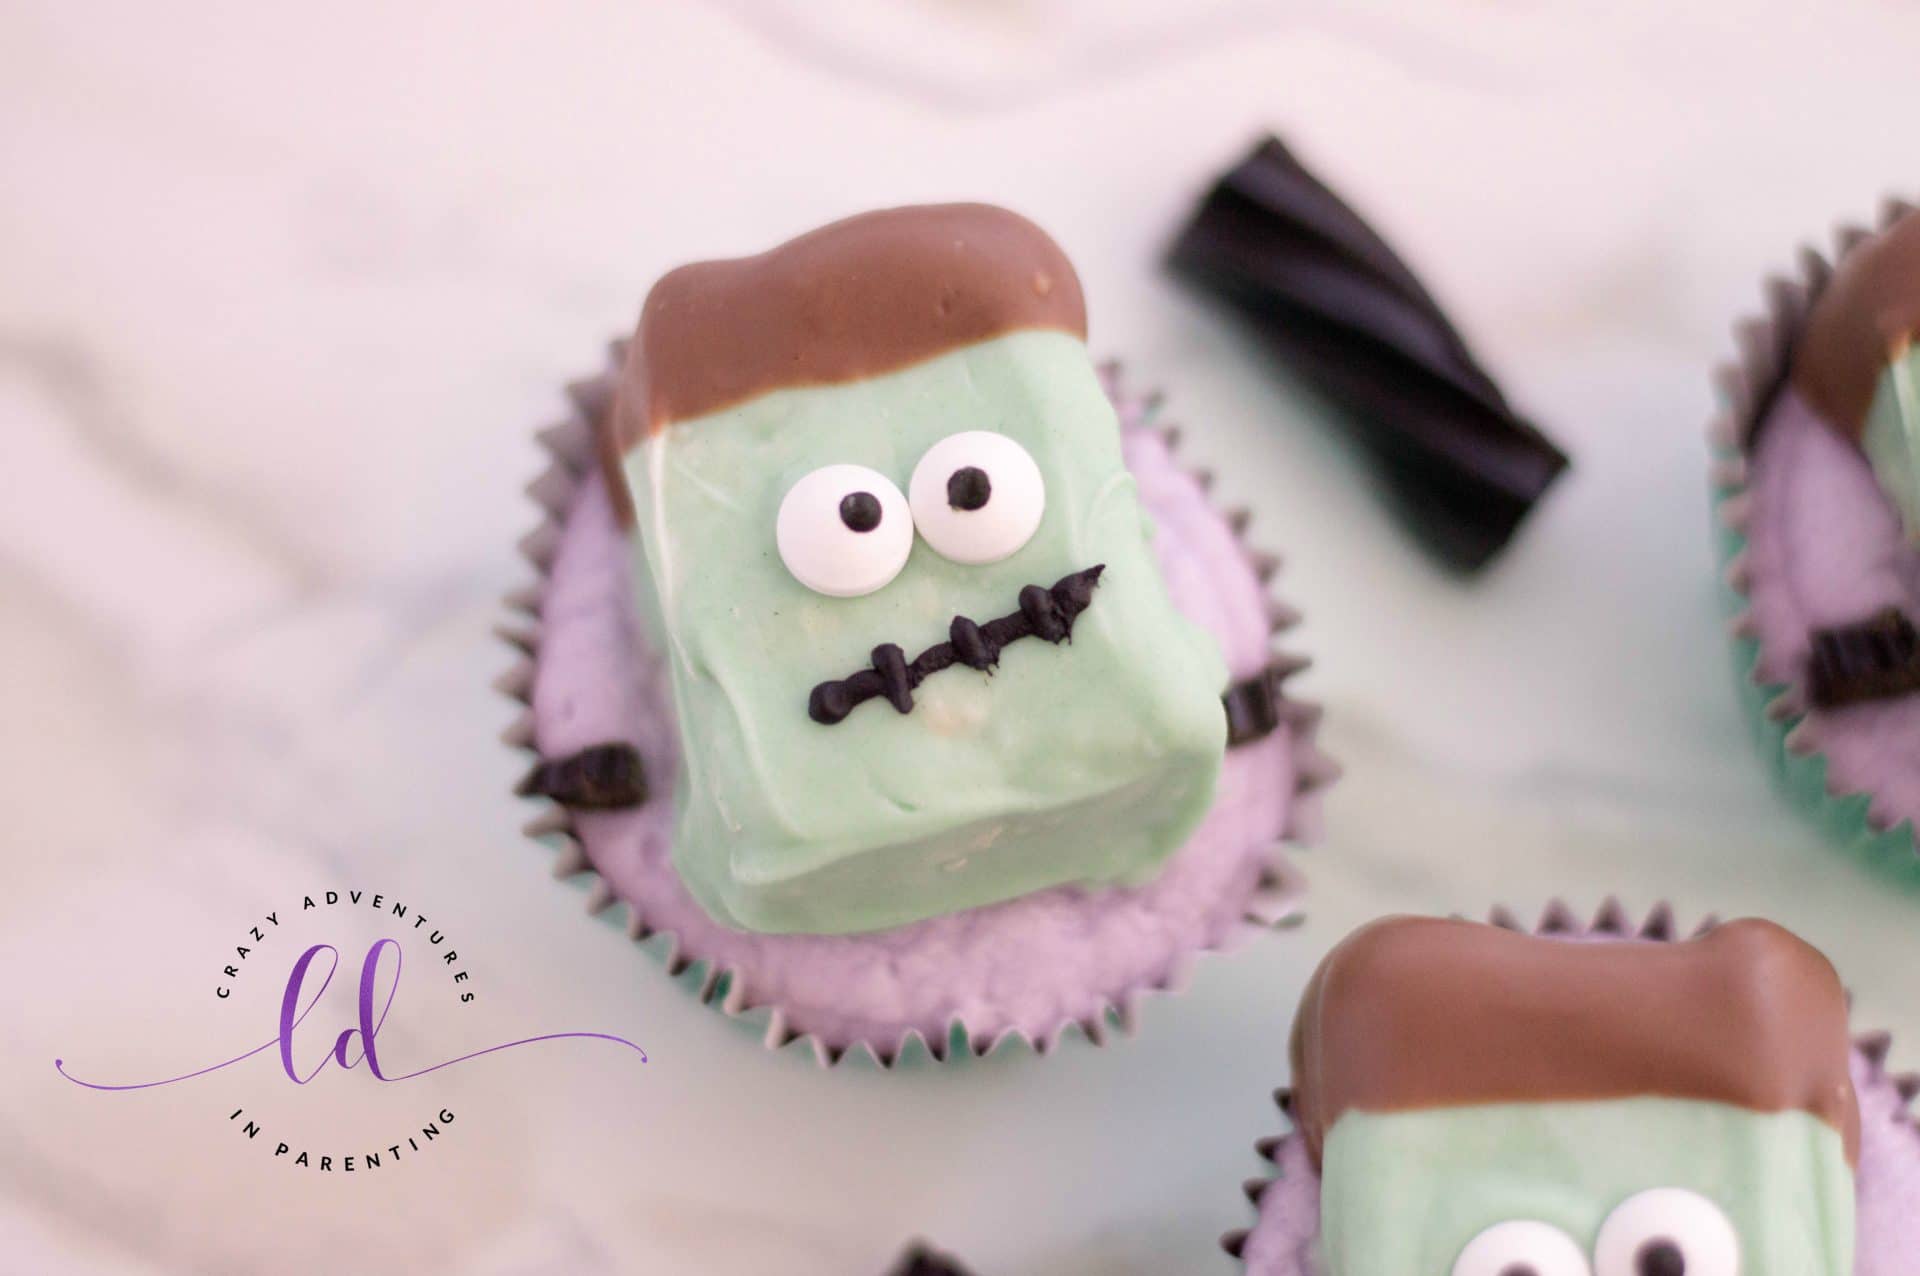 Frankenstein Cupcakes for Halloween